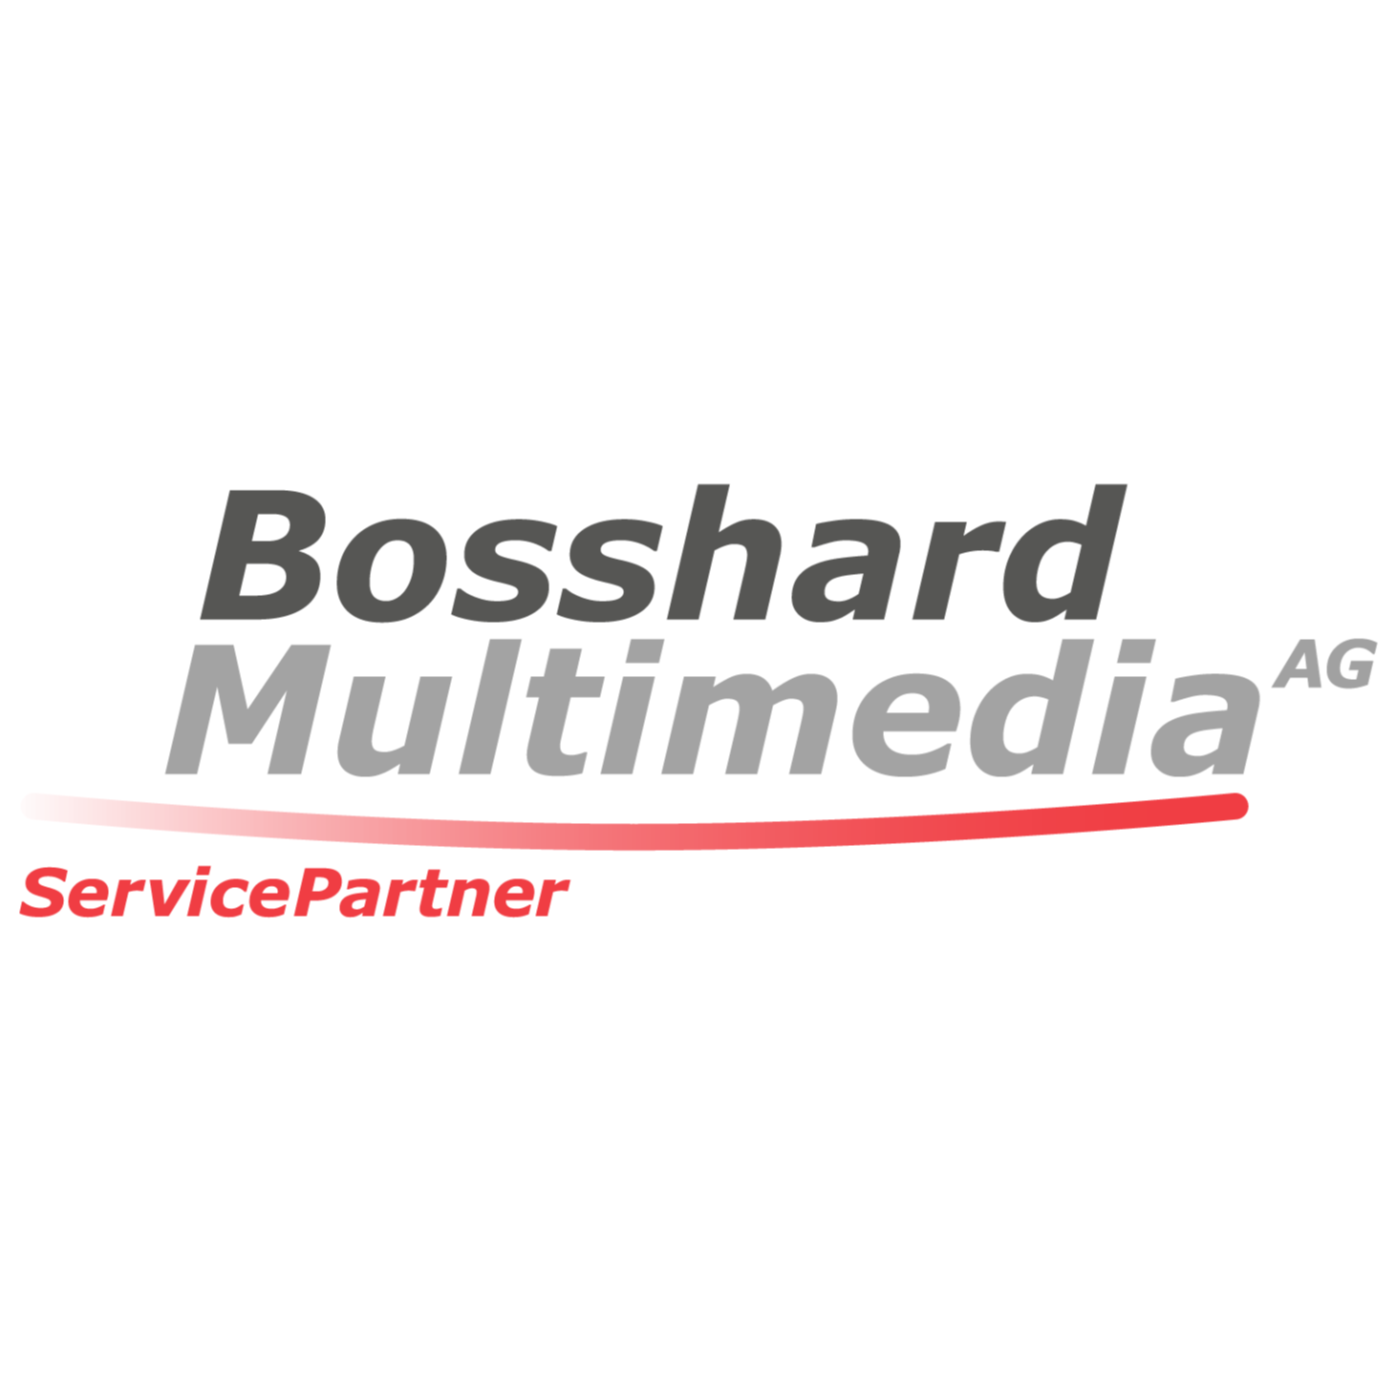 Bosshard Multimedia AG Service Partner Logo